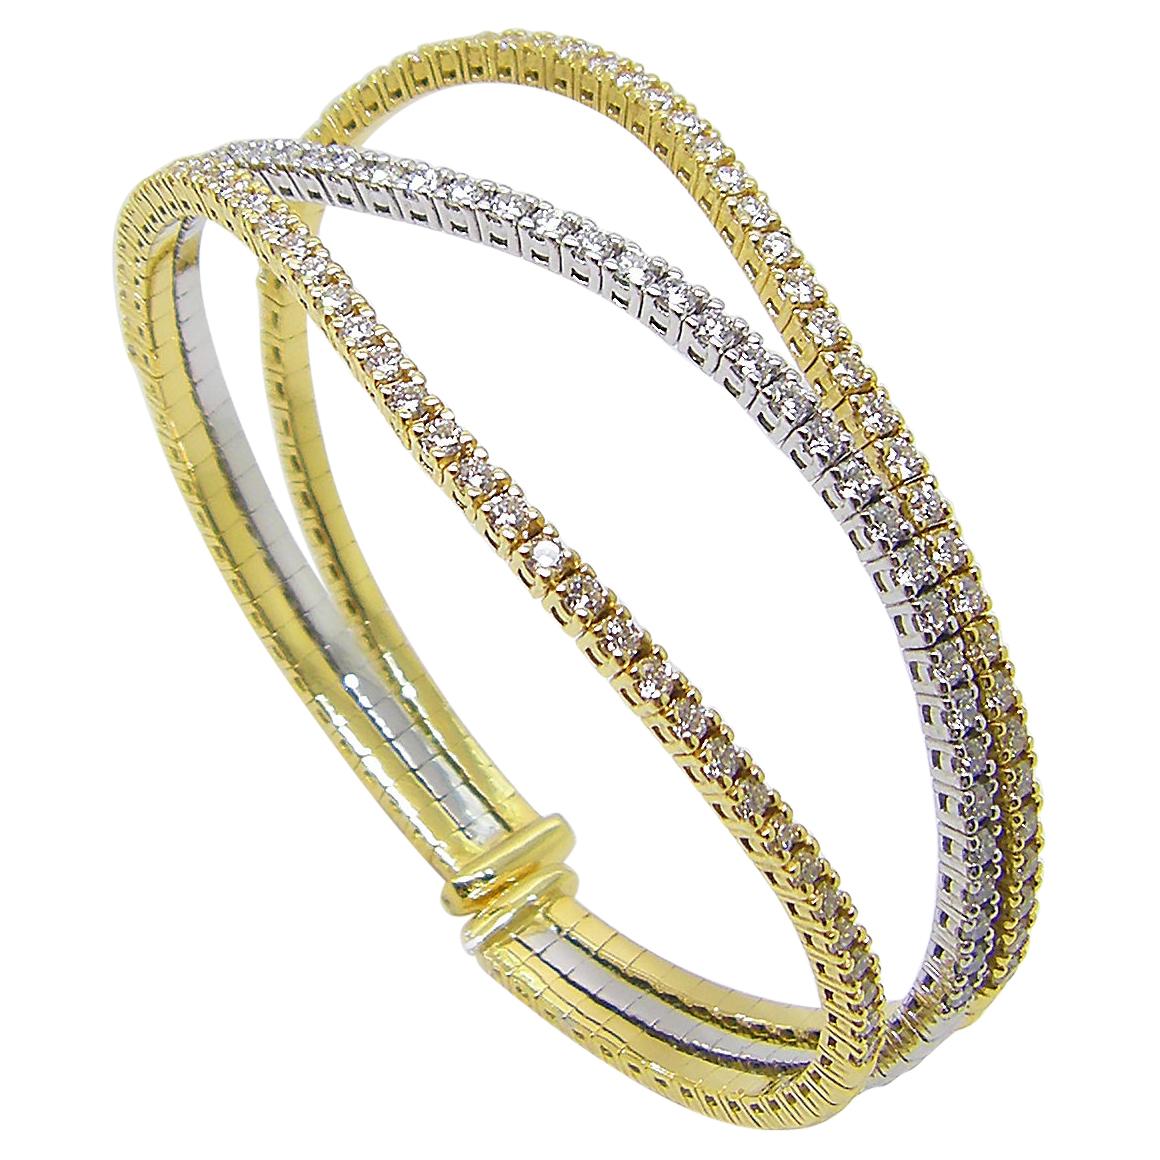 Georgios Collections 18 Karat Yellow and White Gold Diamond Cuff Bracelet